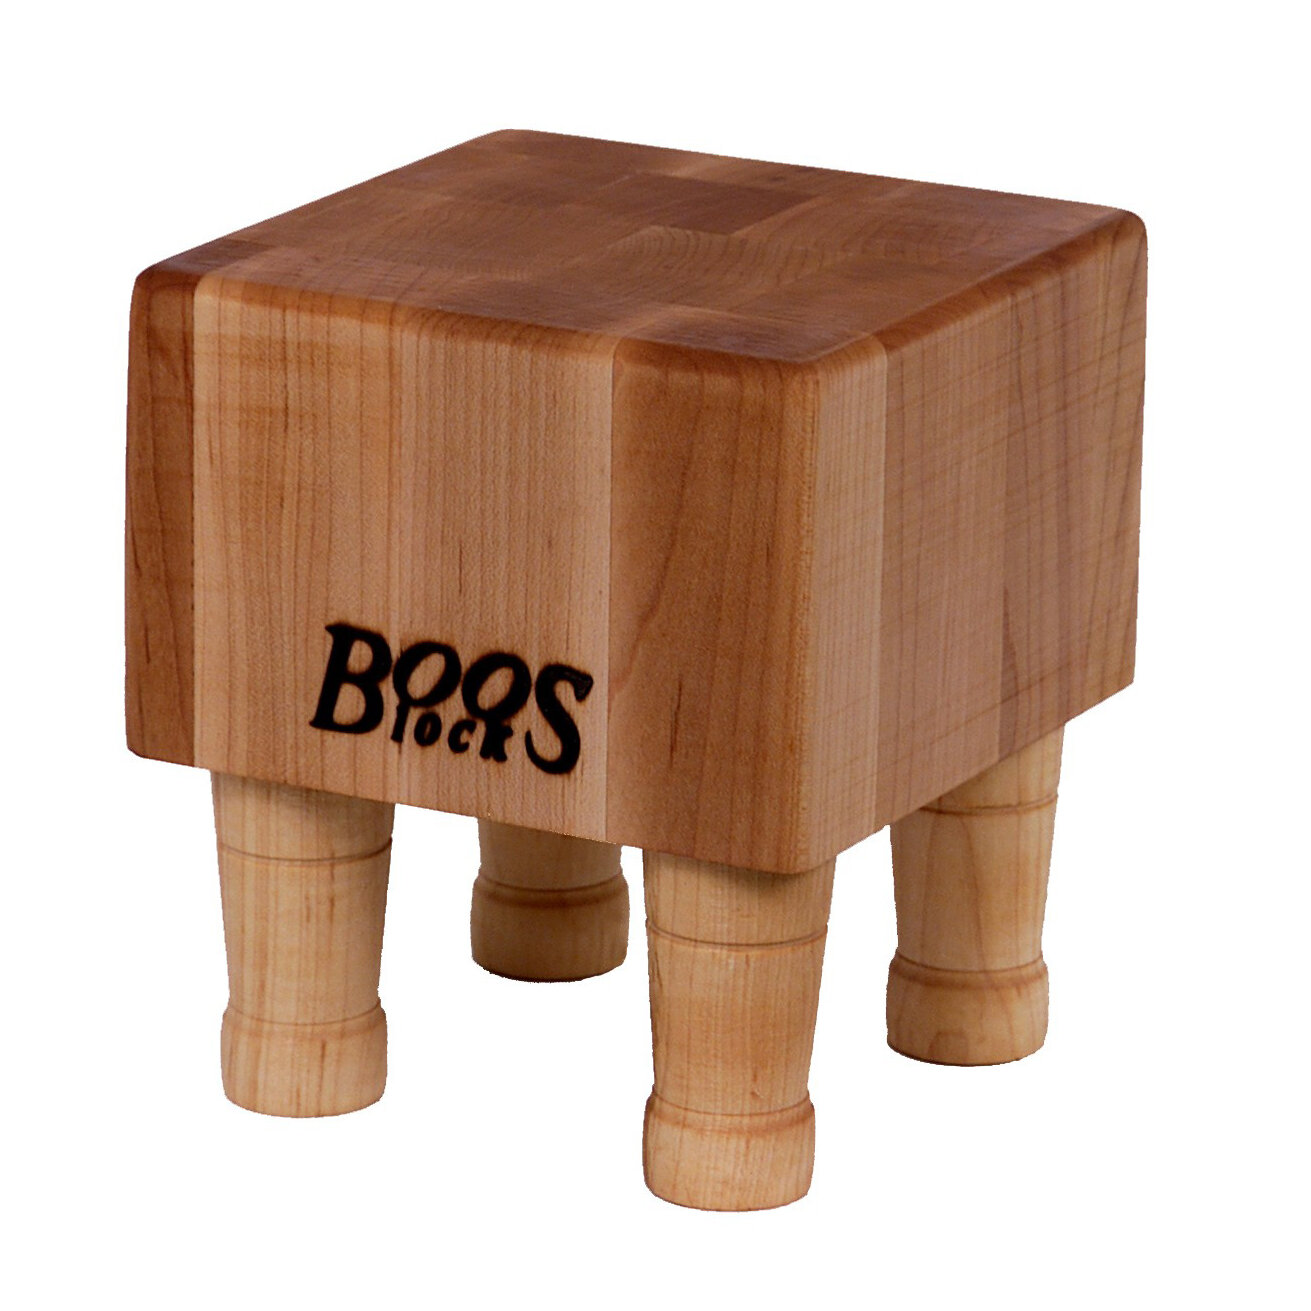 5 Boos Block Cutting Boards You Need For Summer - John Boos & Co